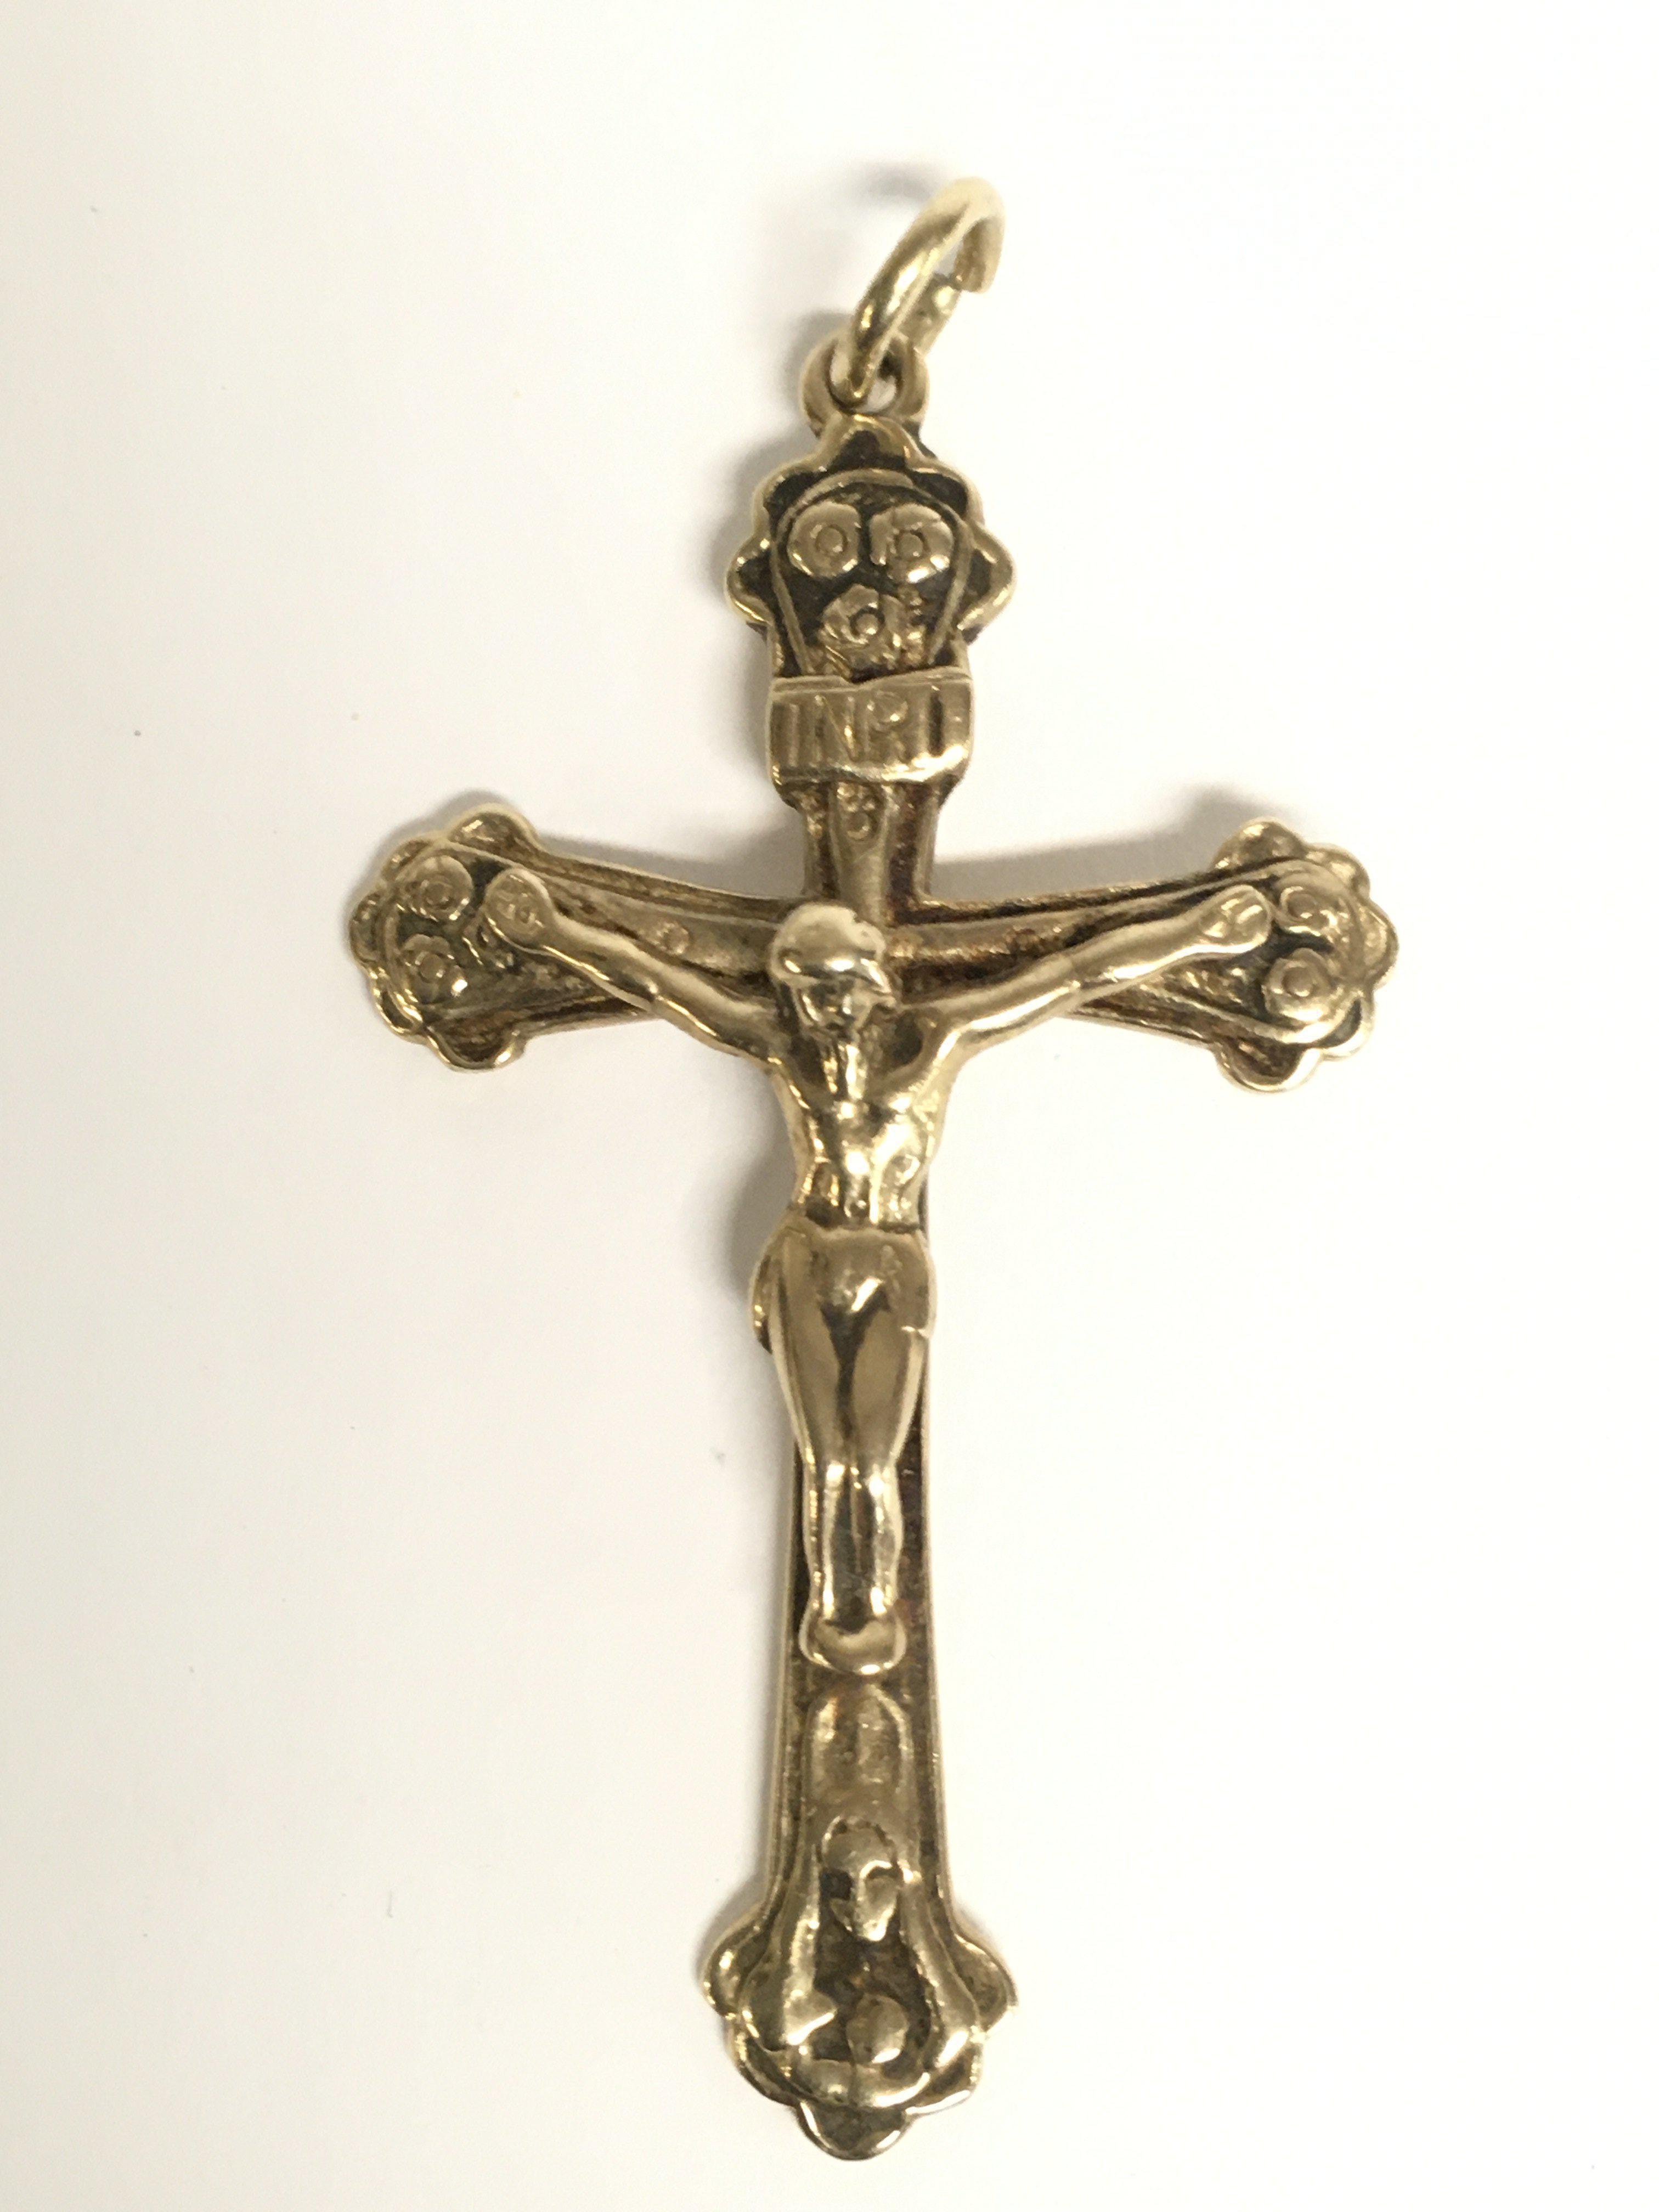 A 9ct gold cross pendant. Approximately 6cm long.